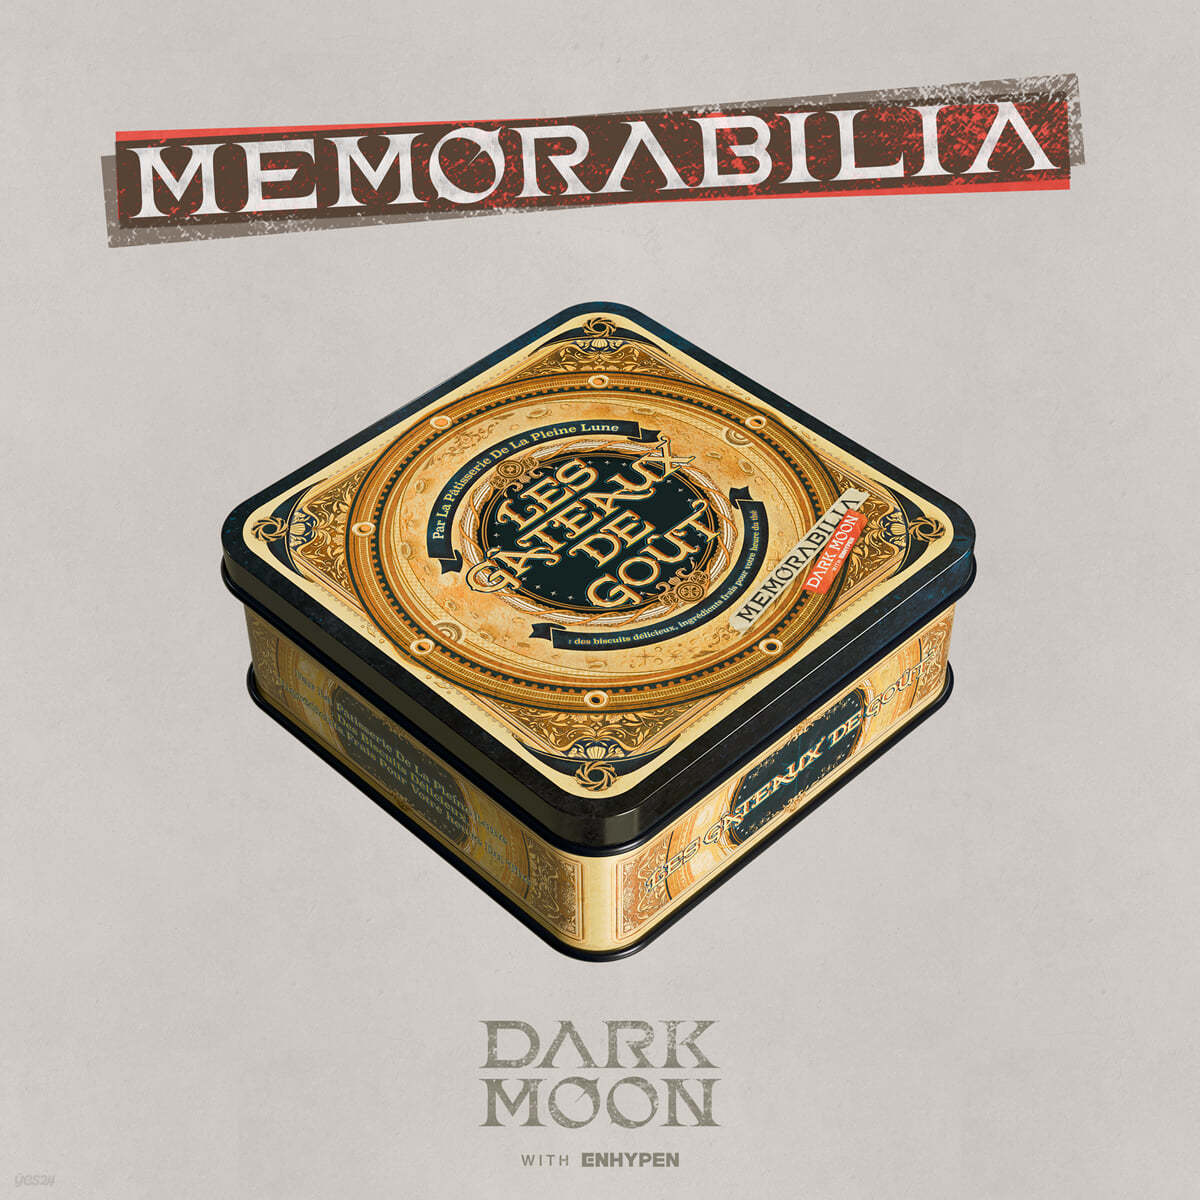 ENHYPEN – DARK MOON SPECIAL ALBUM [MEMORABILIA] (Moon Ver.) + Weverse Gift